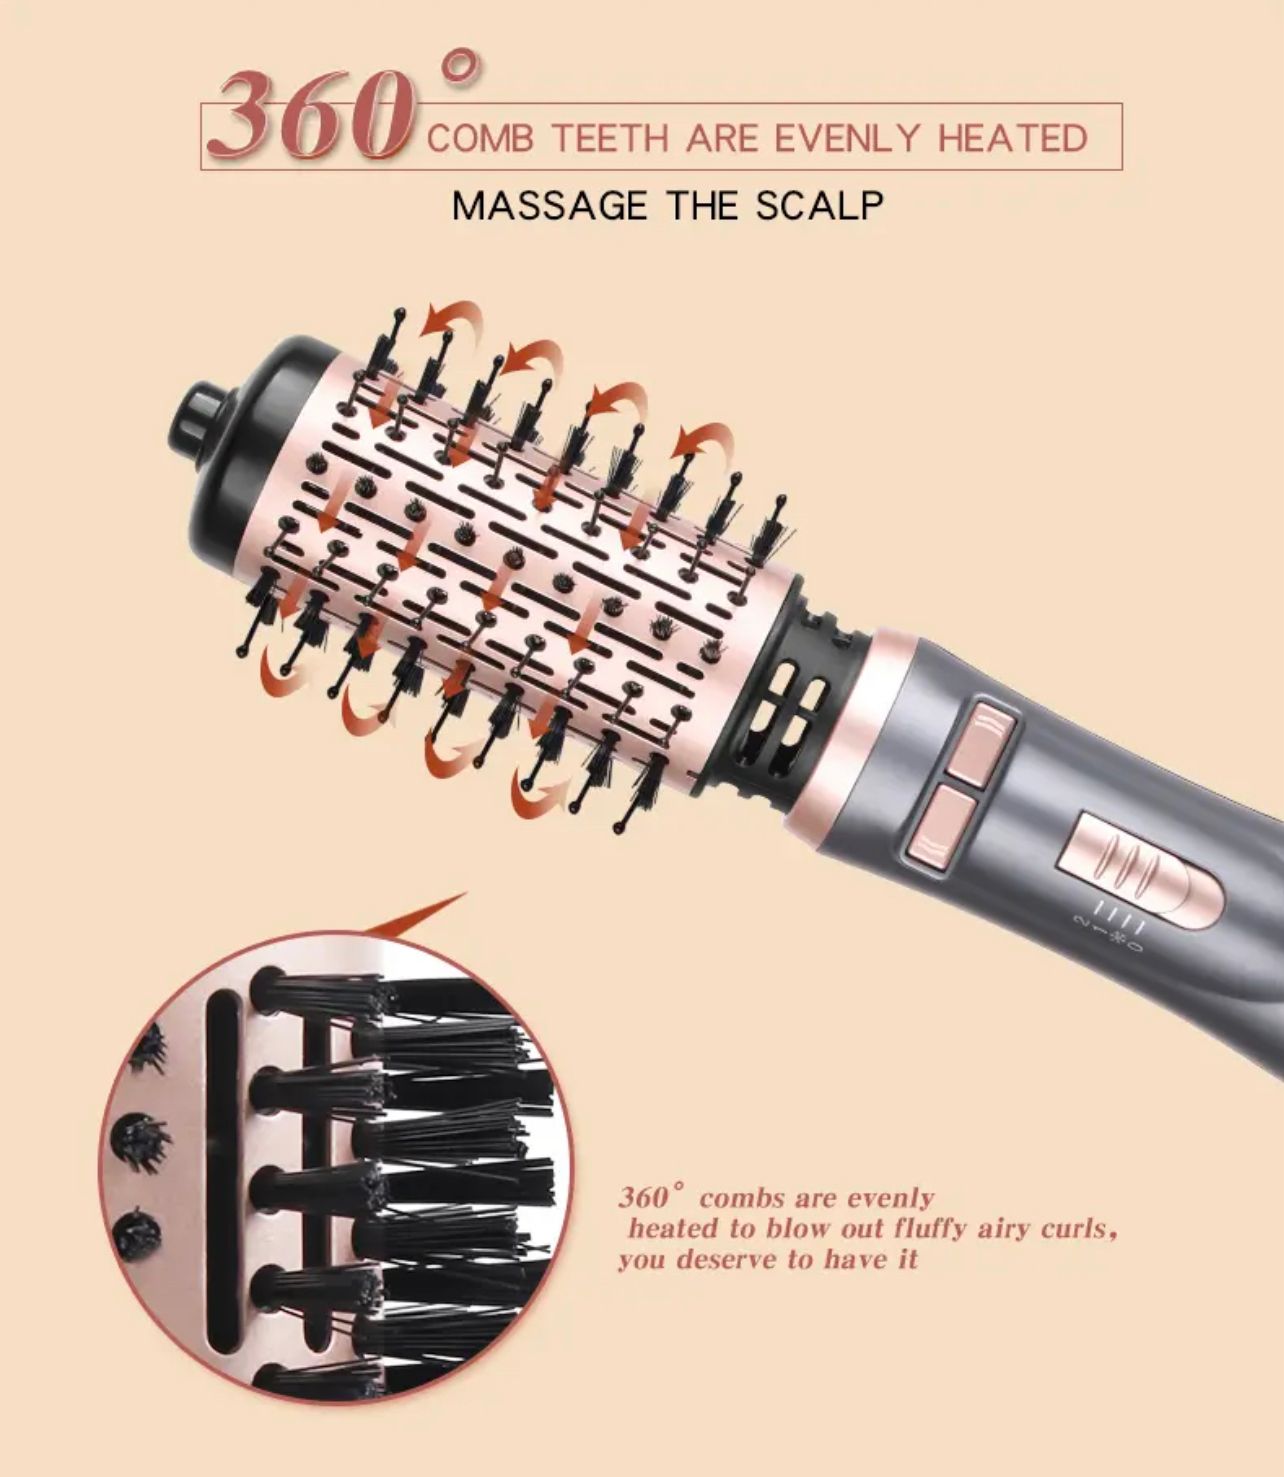 Enzo Auto Rotating Hair Brush 1500W